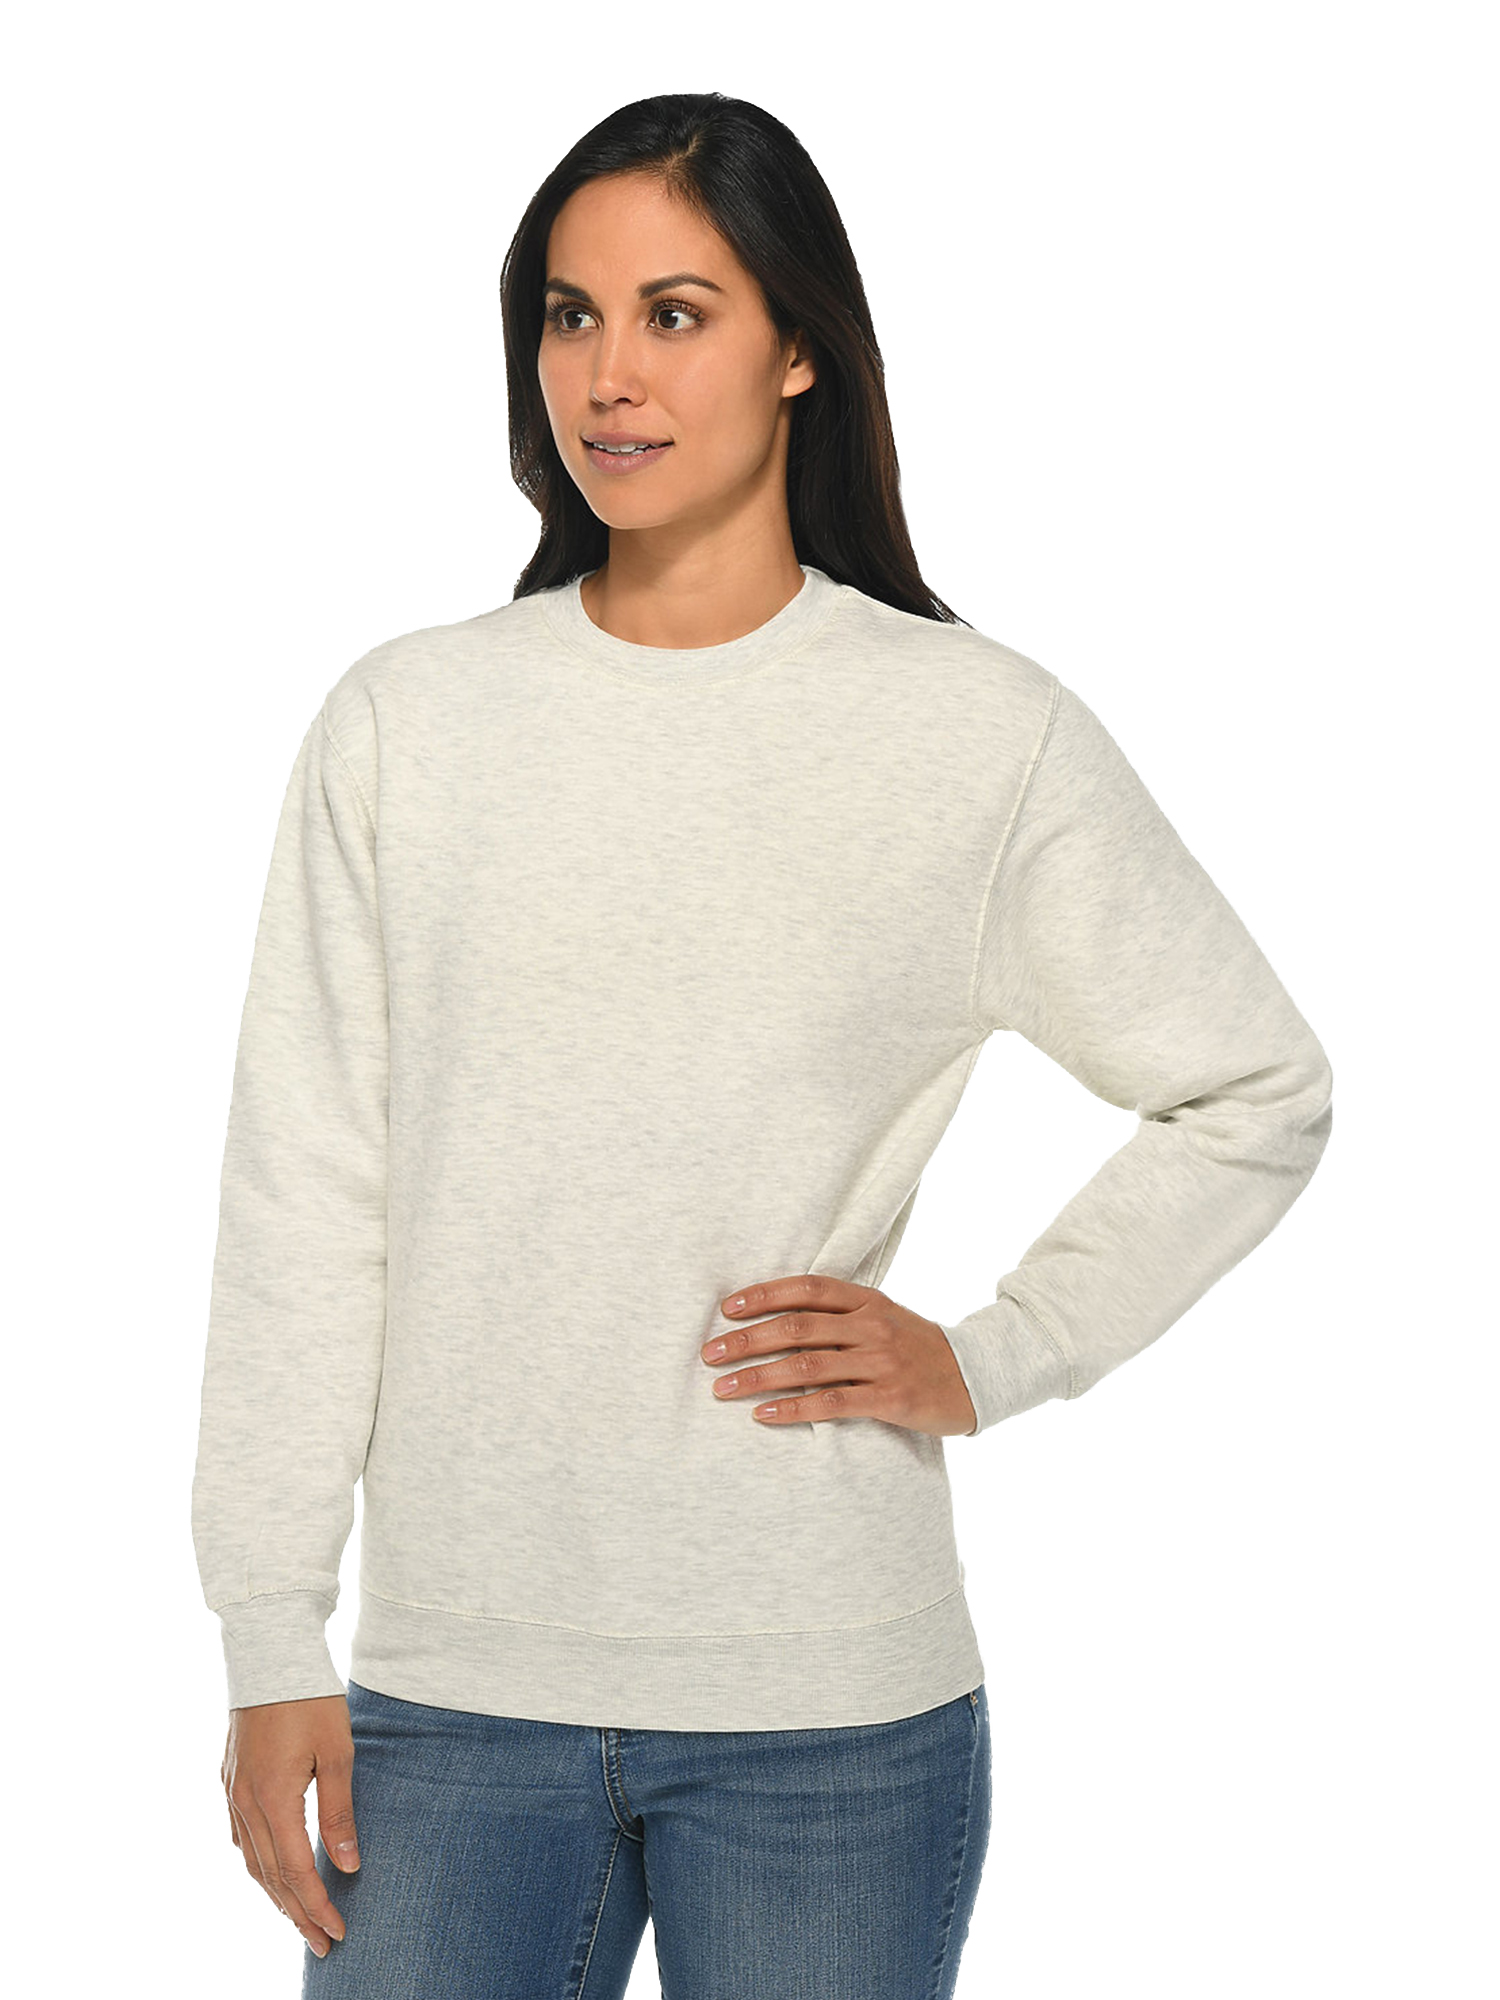 Simaier Women Sweatshirt Cotton Long Sleeve Casual Tops Plain Loose Fit